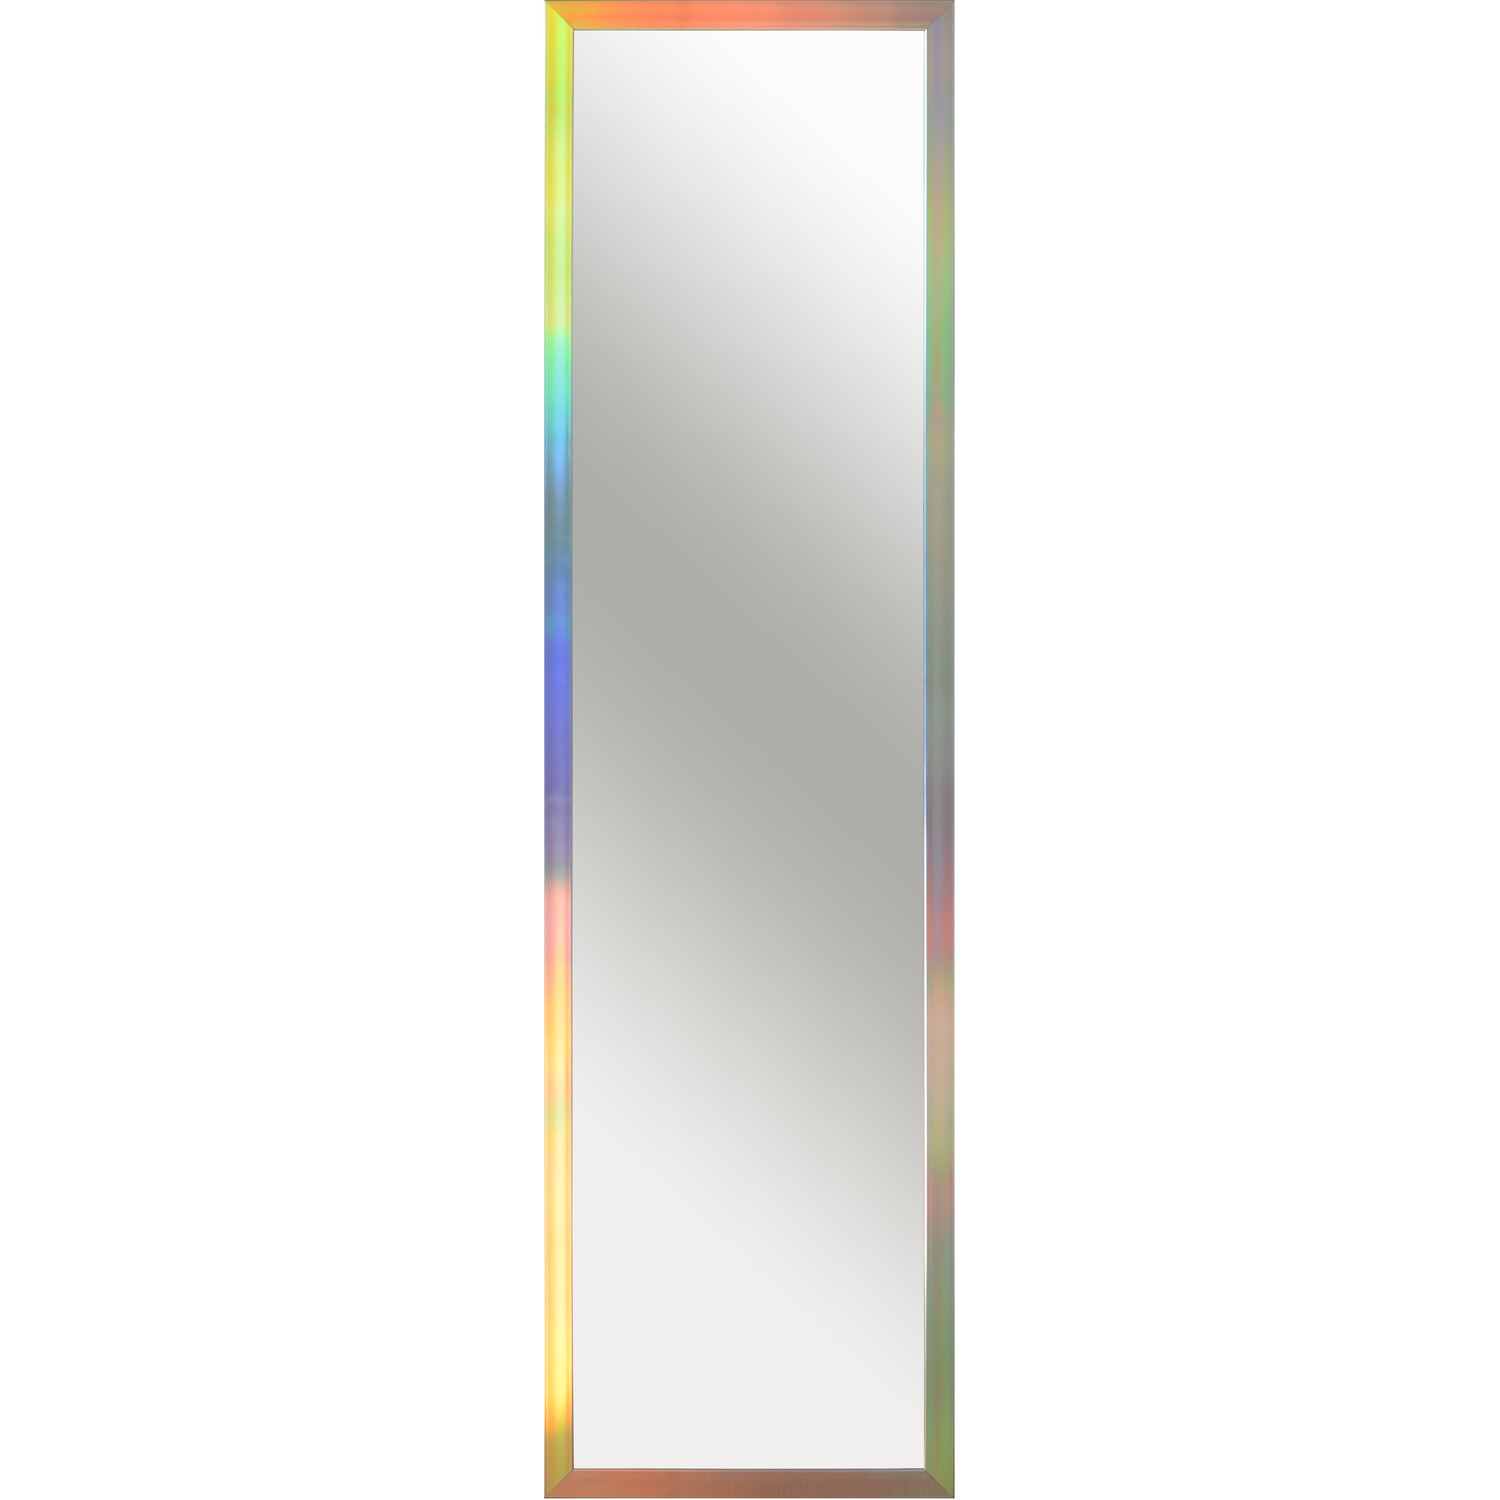 Iridescent Wall Mirror Image